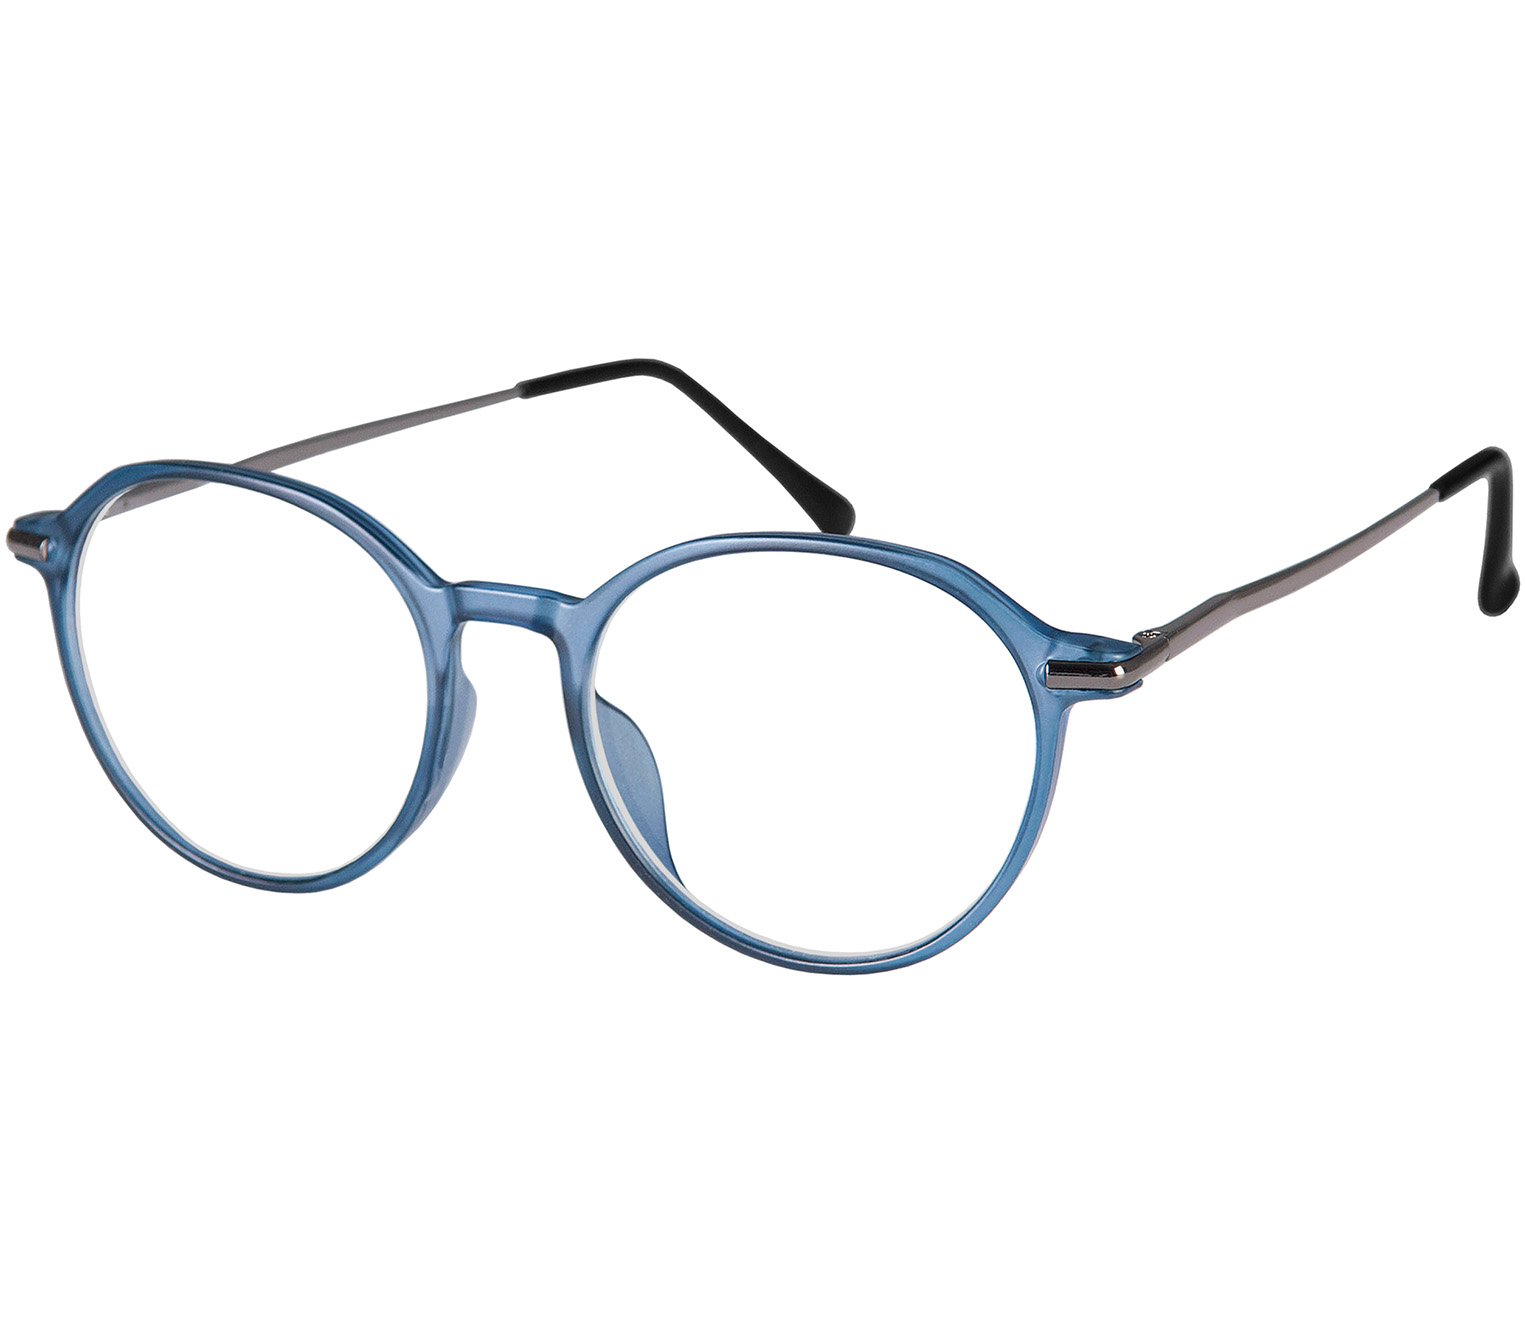 Main Image (Angle) - Halifax (Blue) Retro Reading Glasses